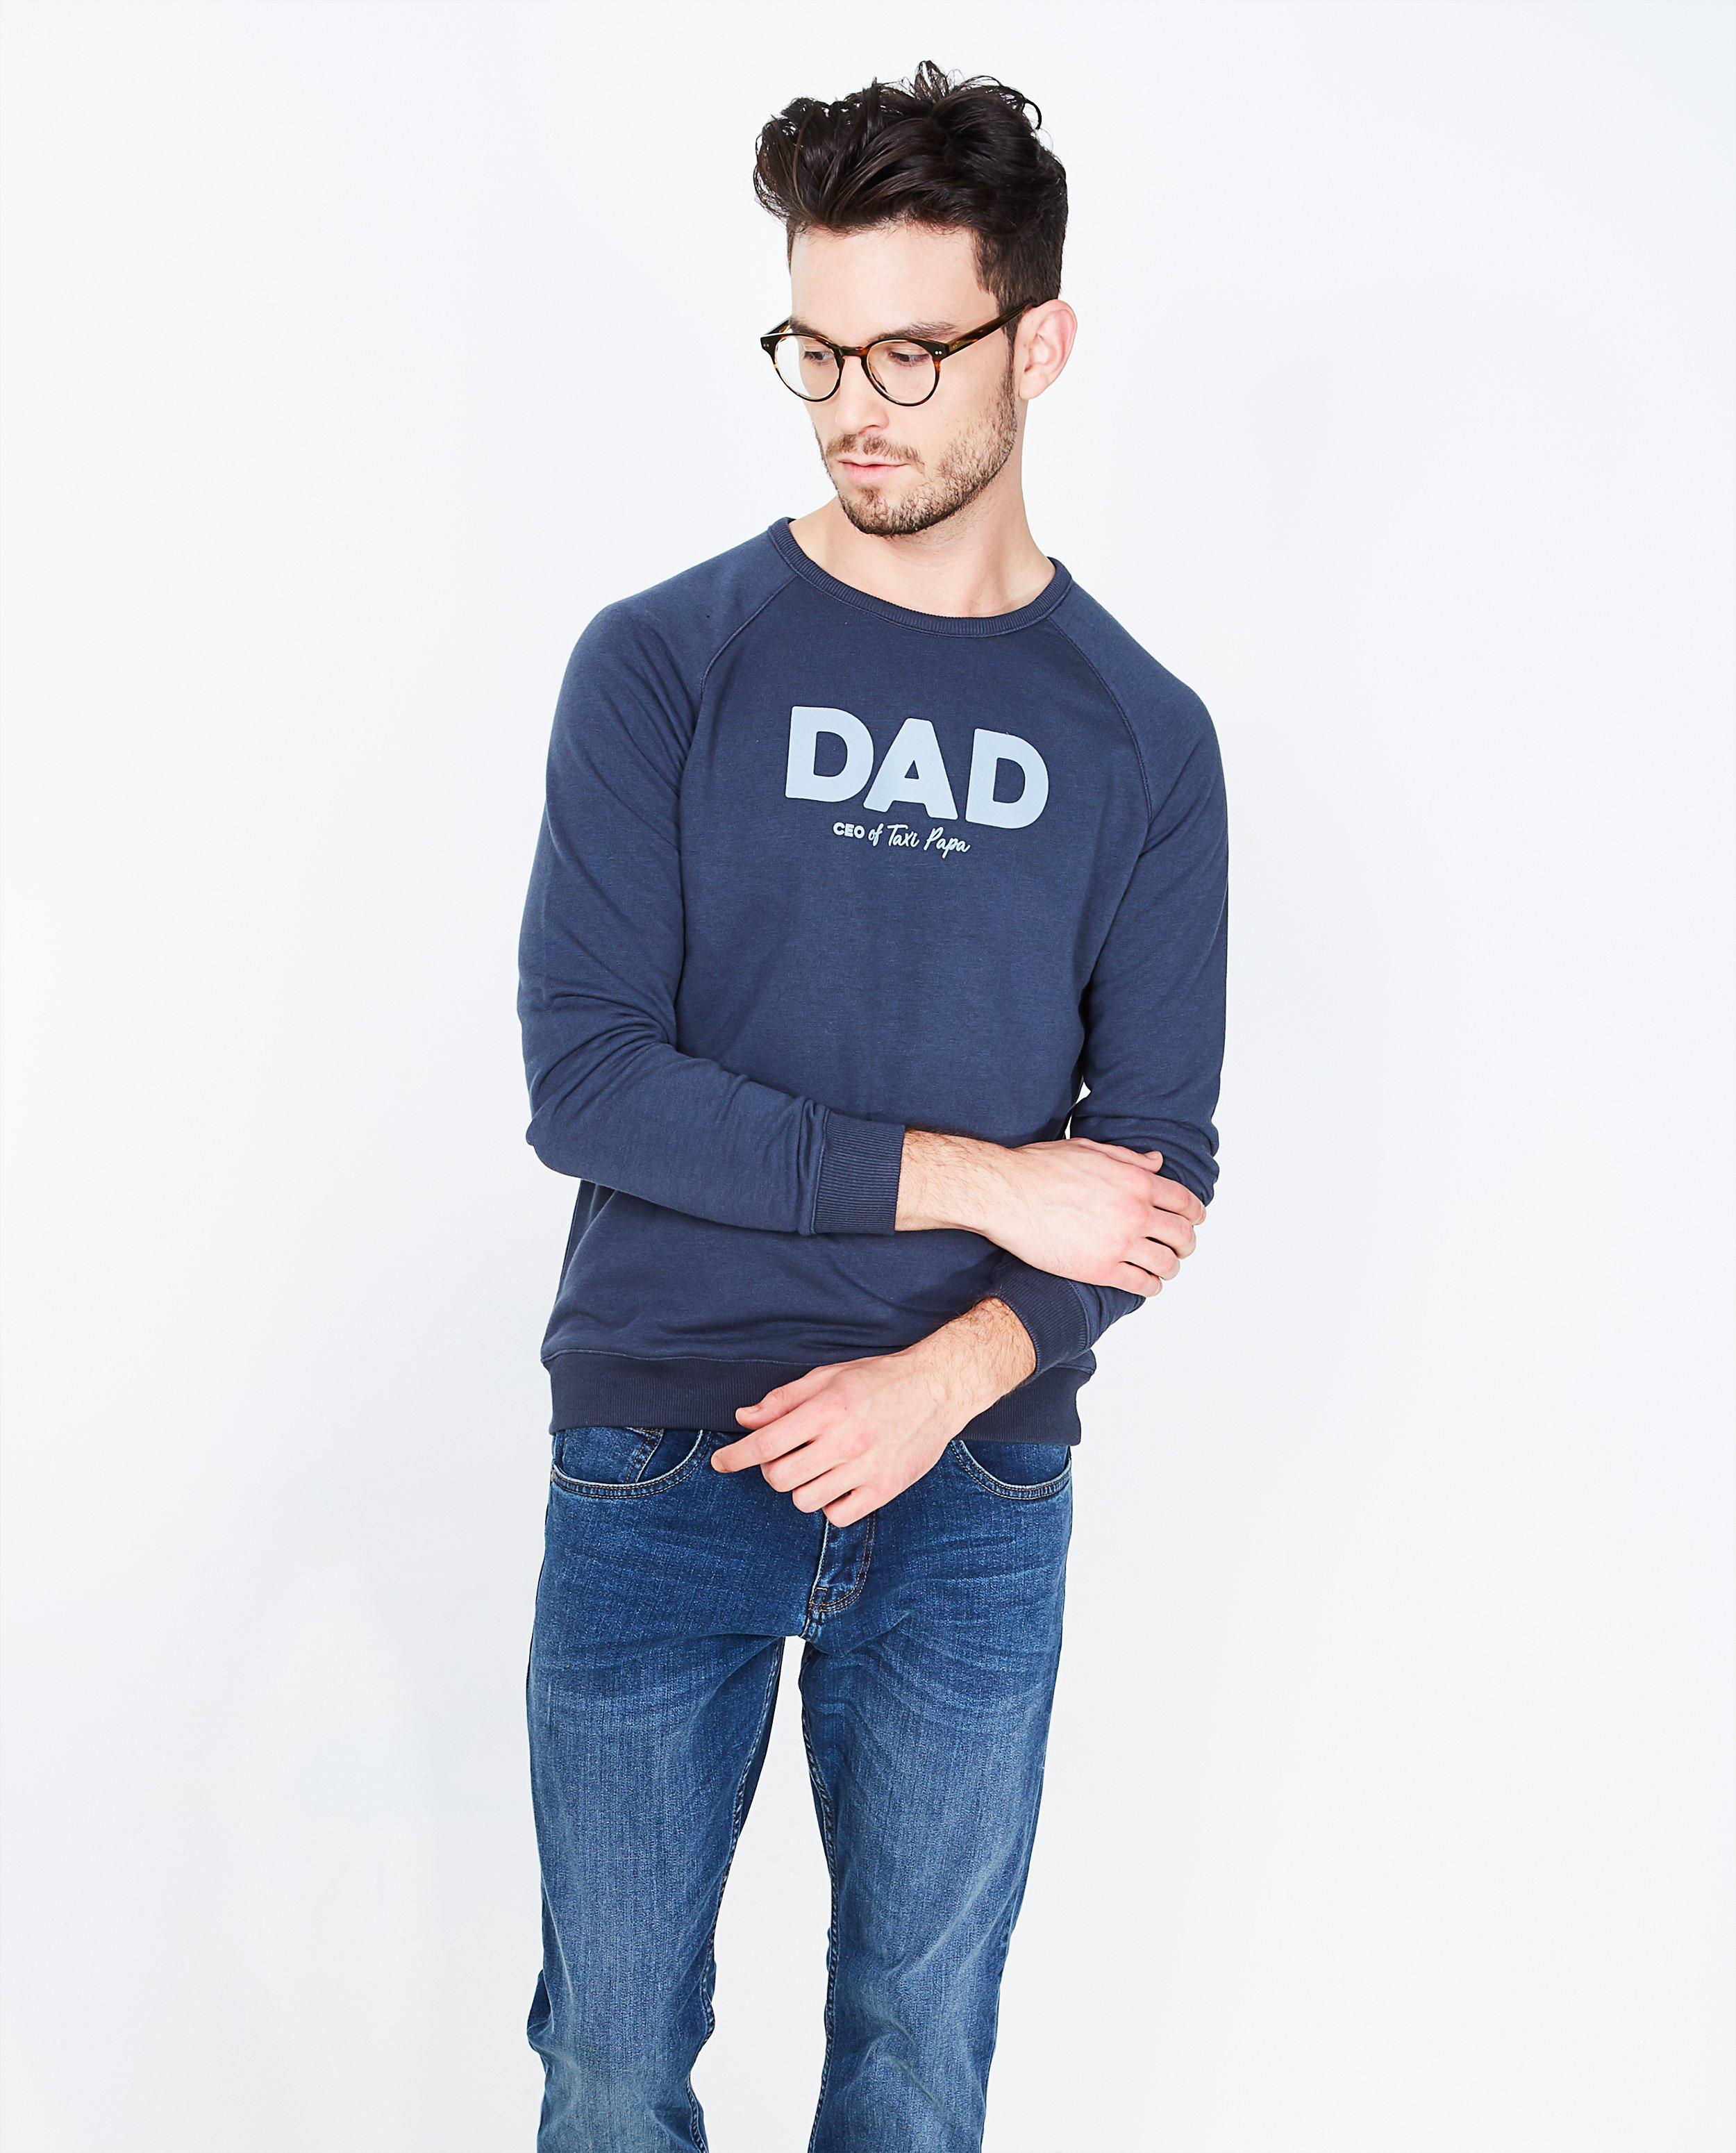 Nachtblauwe sweater #familystoriesjbc - null - JBC